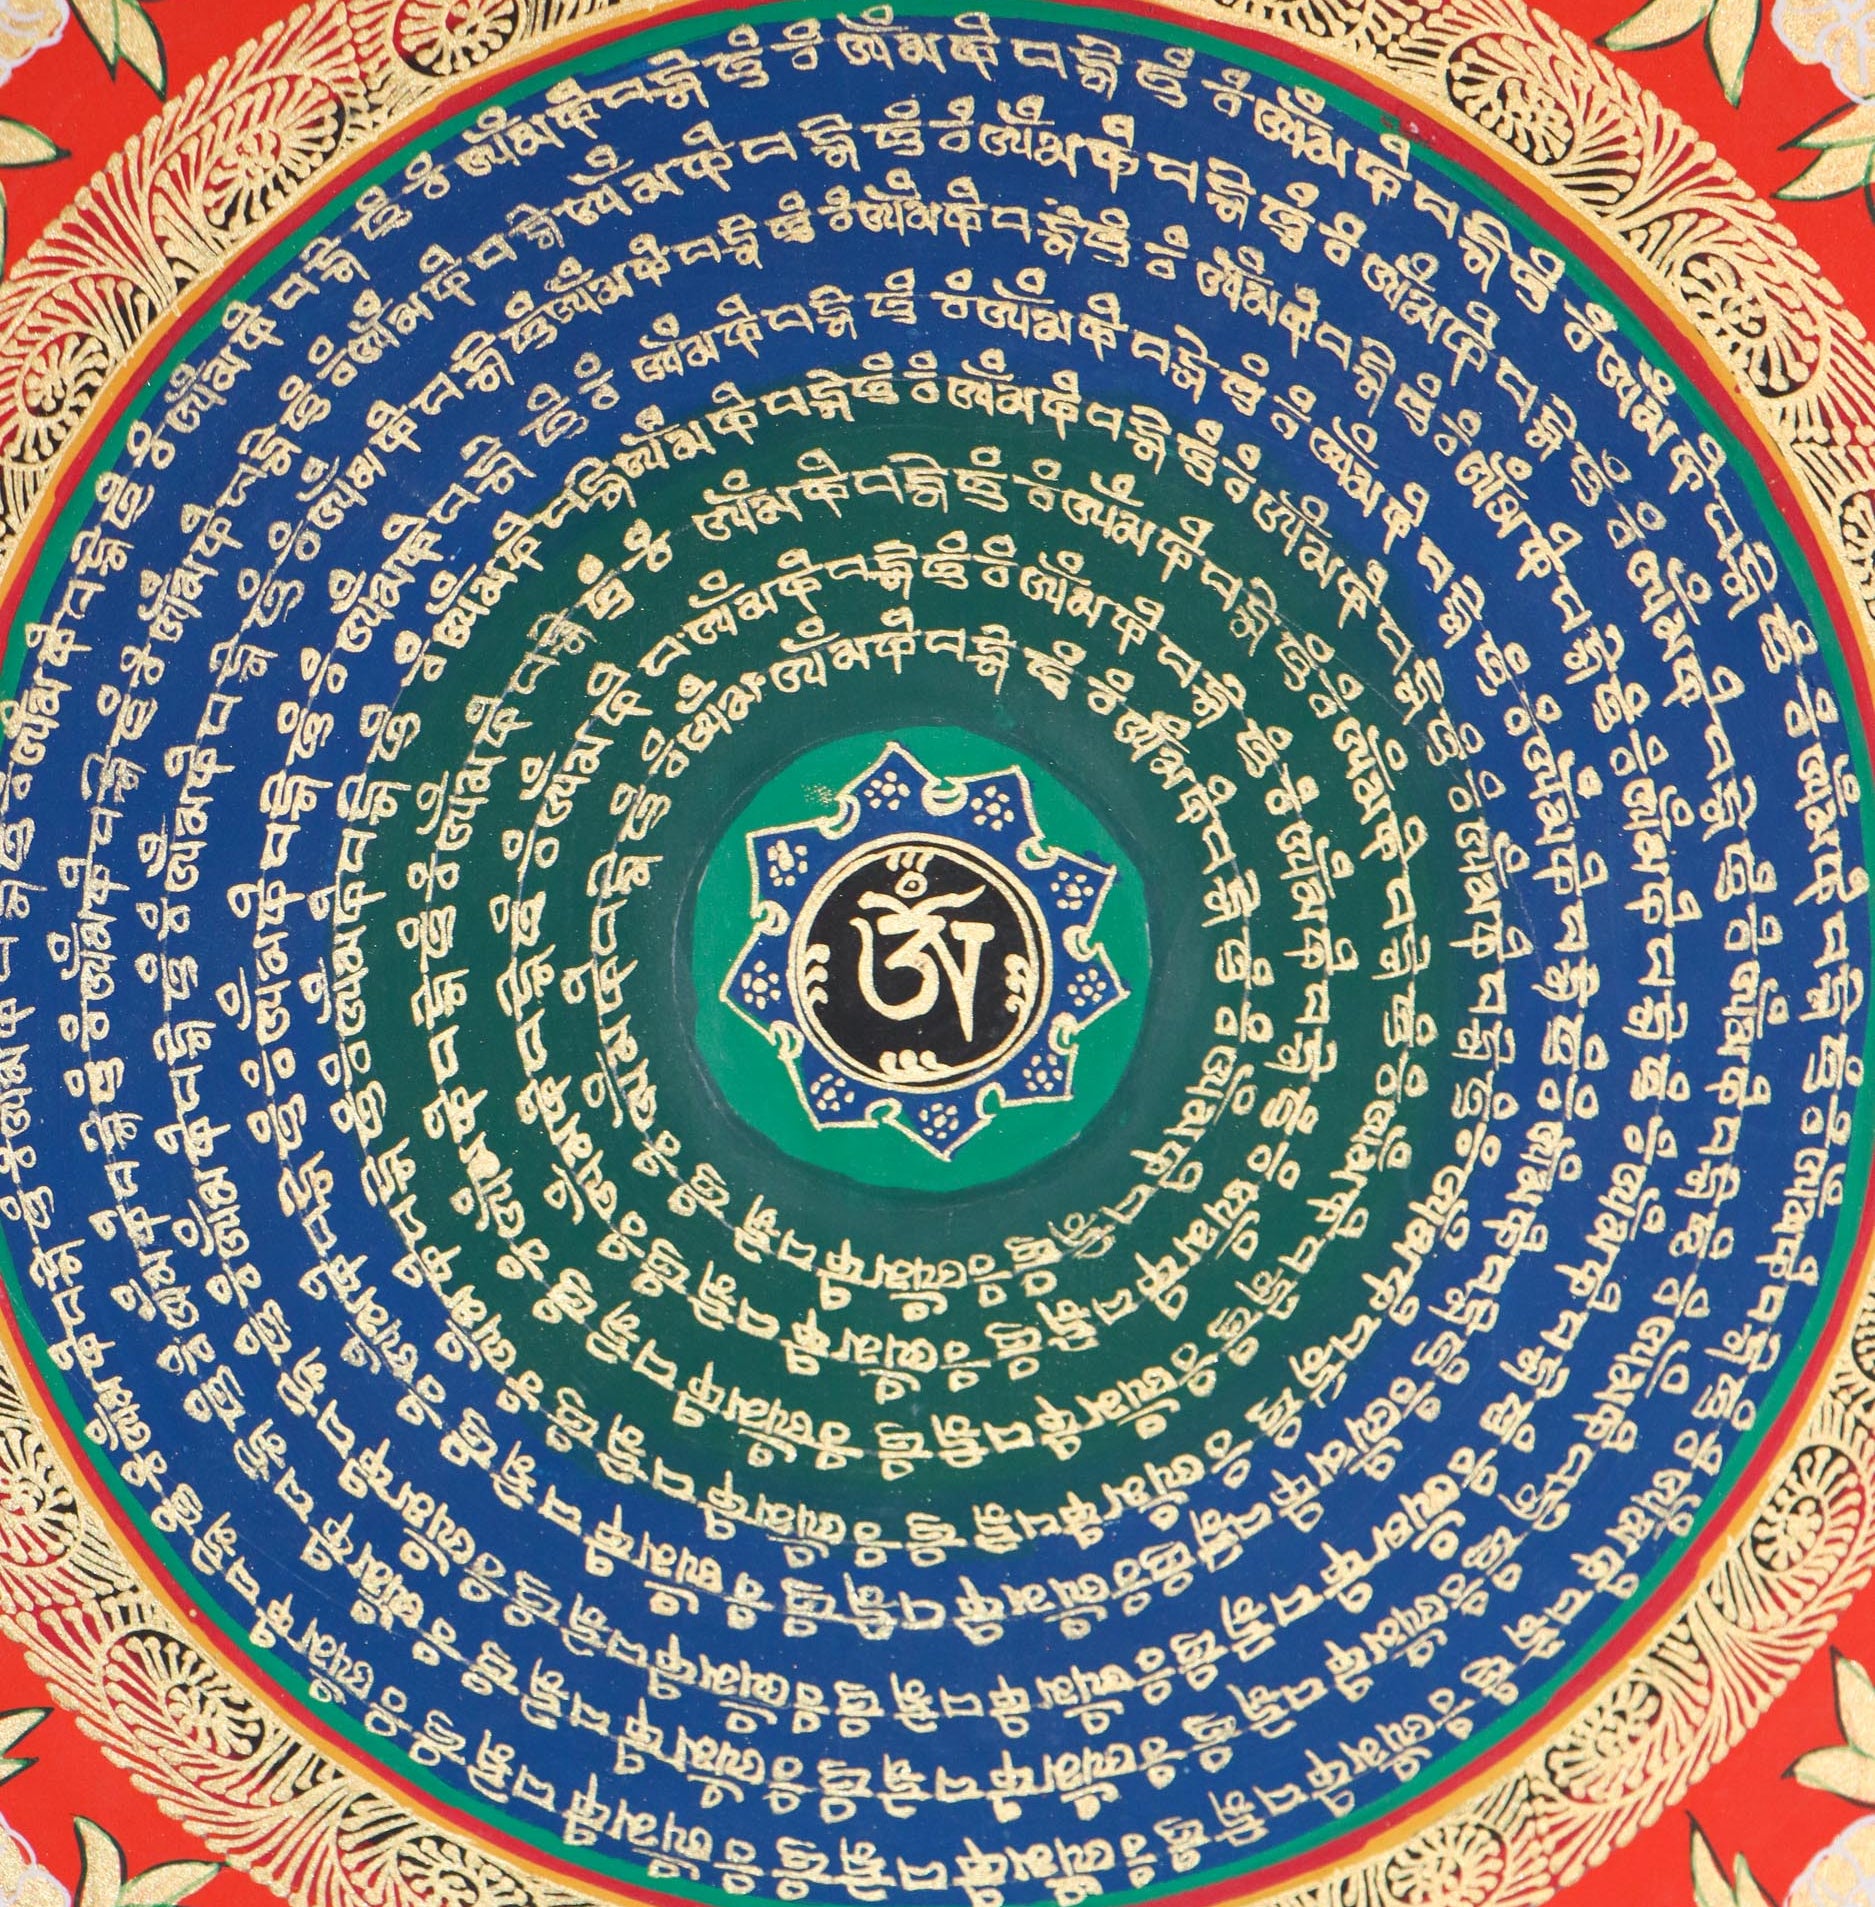 Mantra Mandala Thangka helps encourage spiritual growth, and provide guidance and protection.